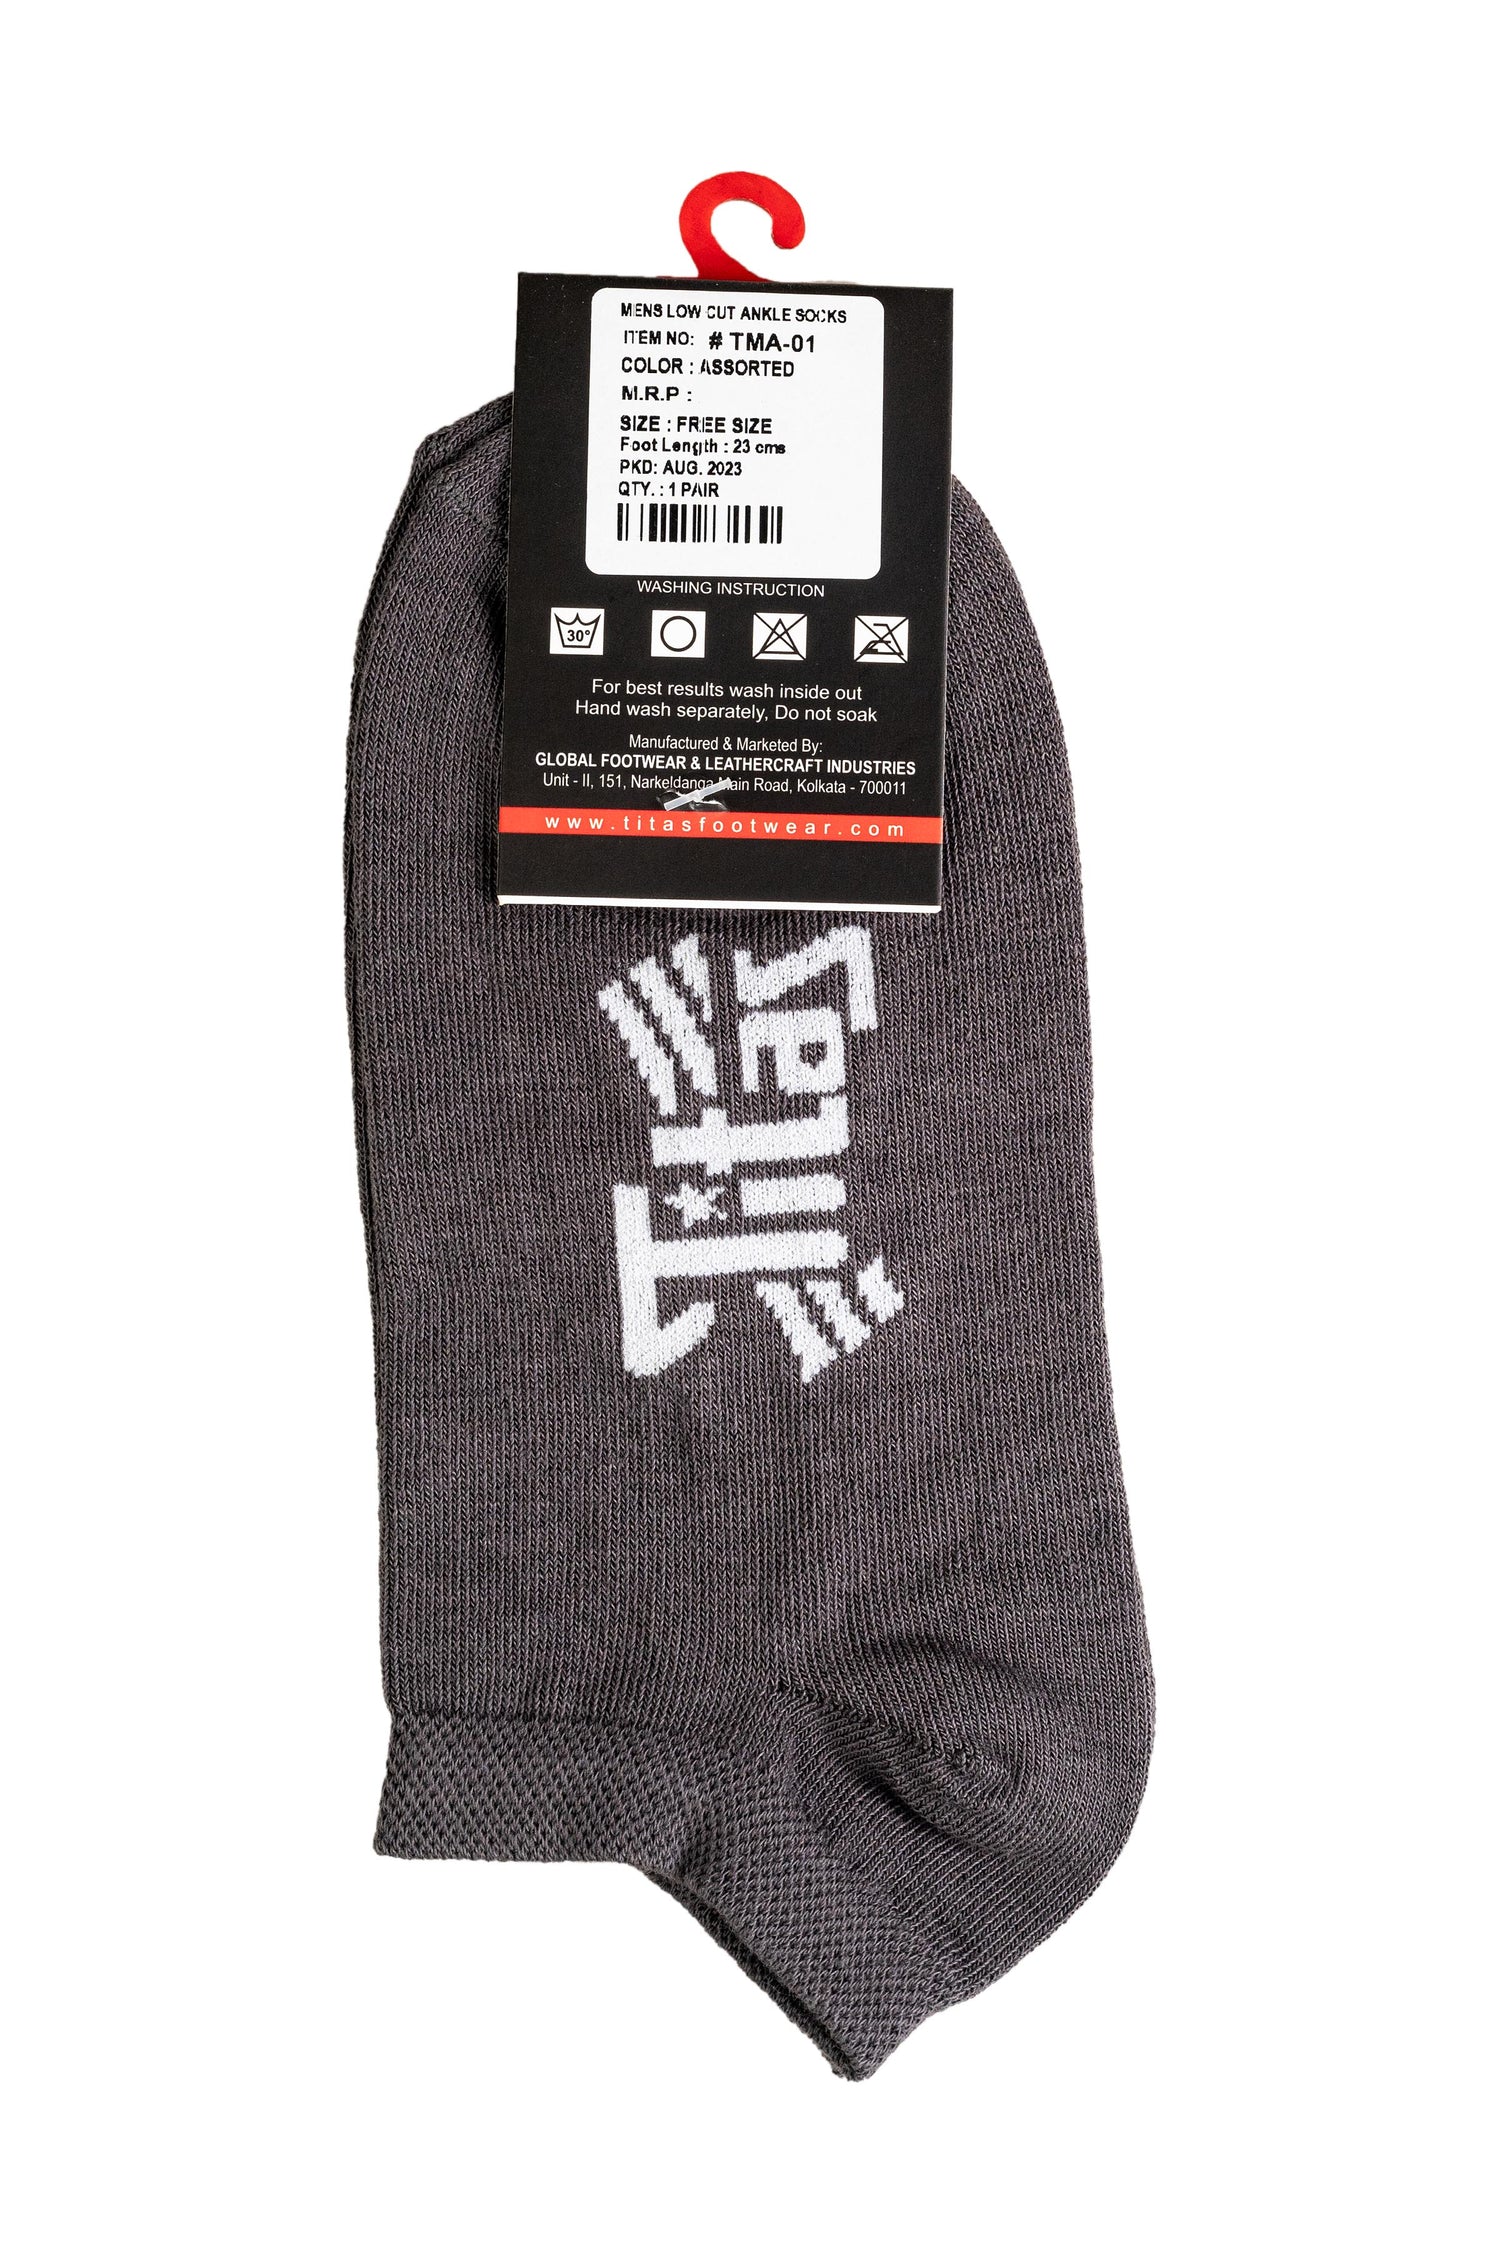 Titas Gents Comfort Blend Assorted Low Ankle Socks